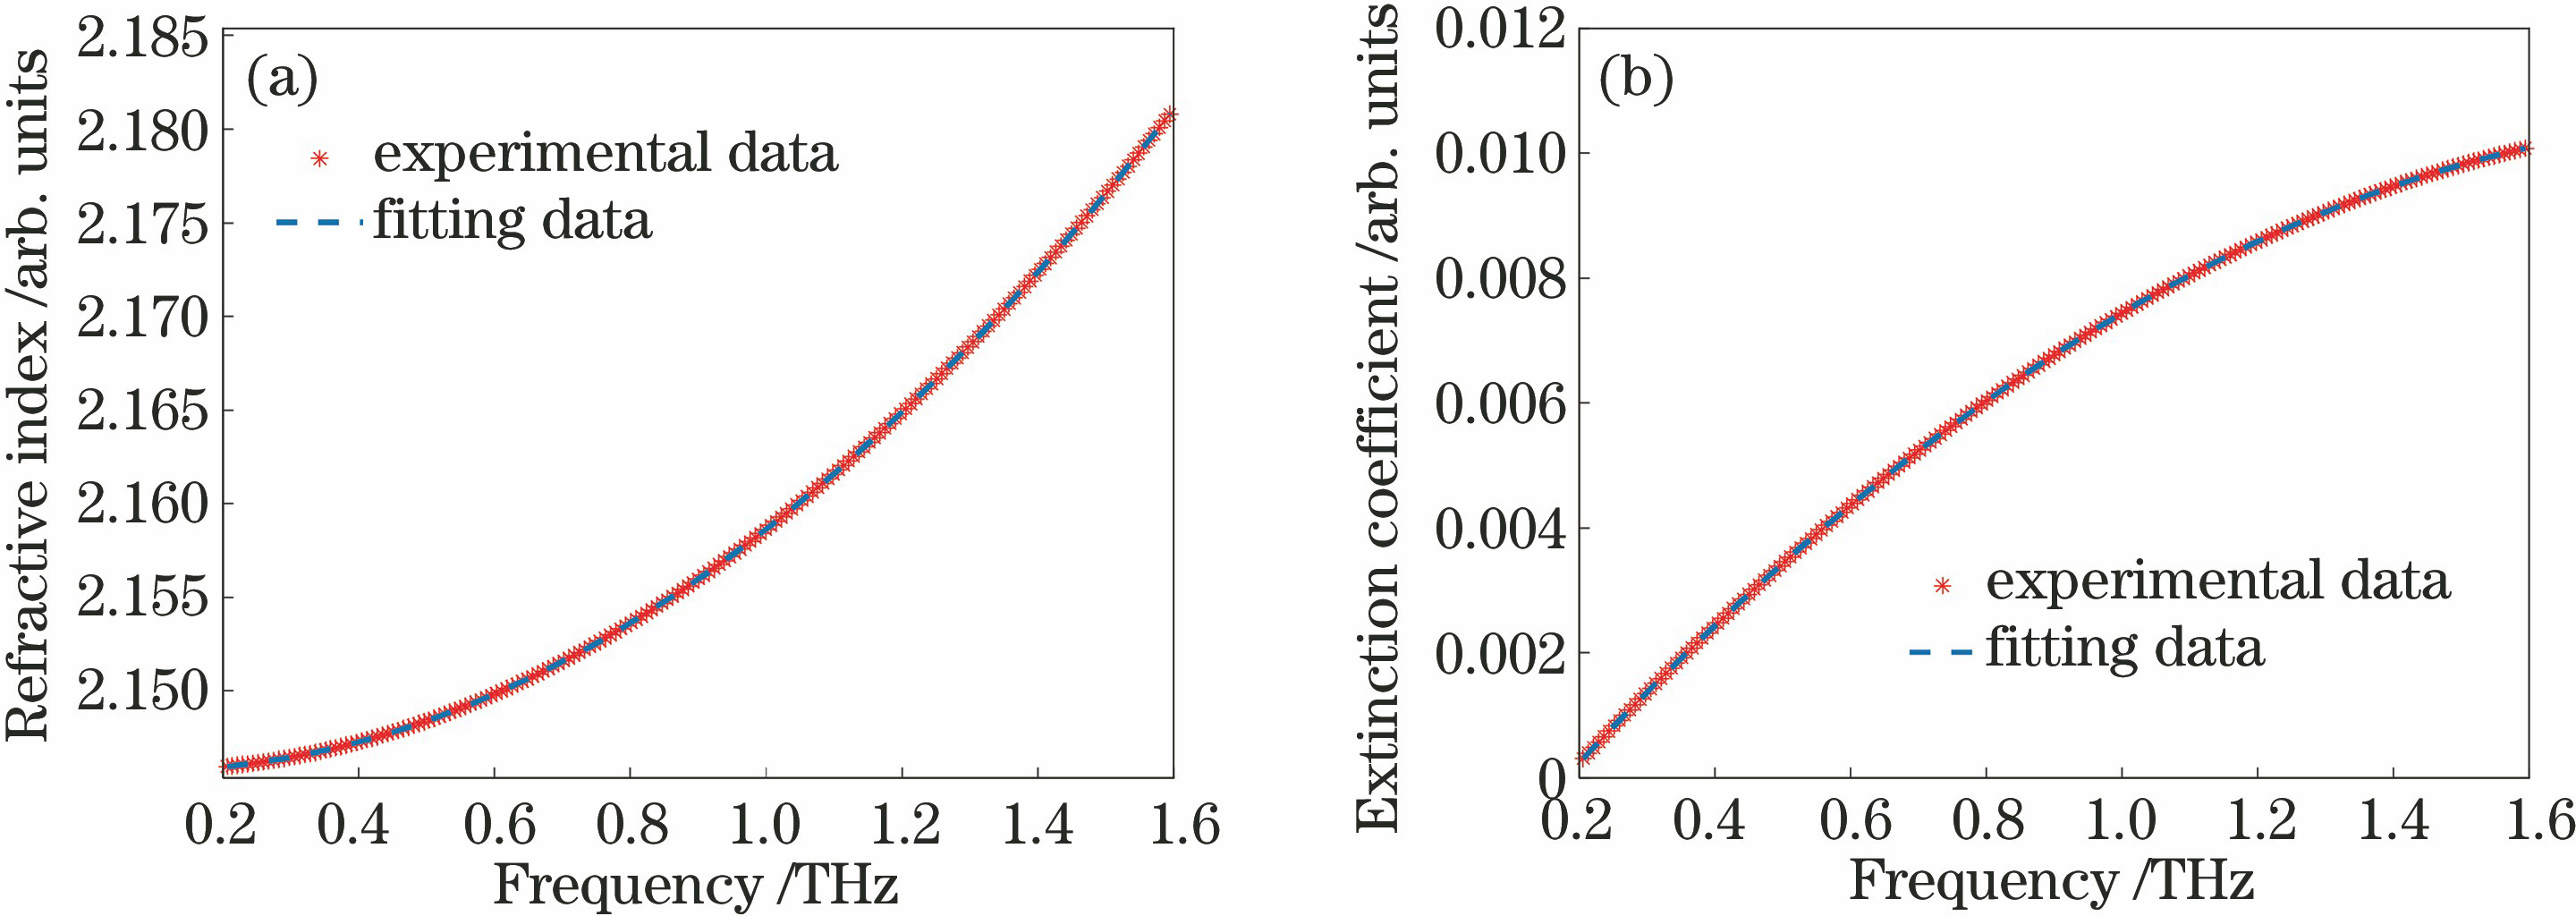 Optical parameters of glass fiber composite material. (a) Refractive index; (b) extinction coefficient